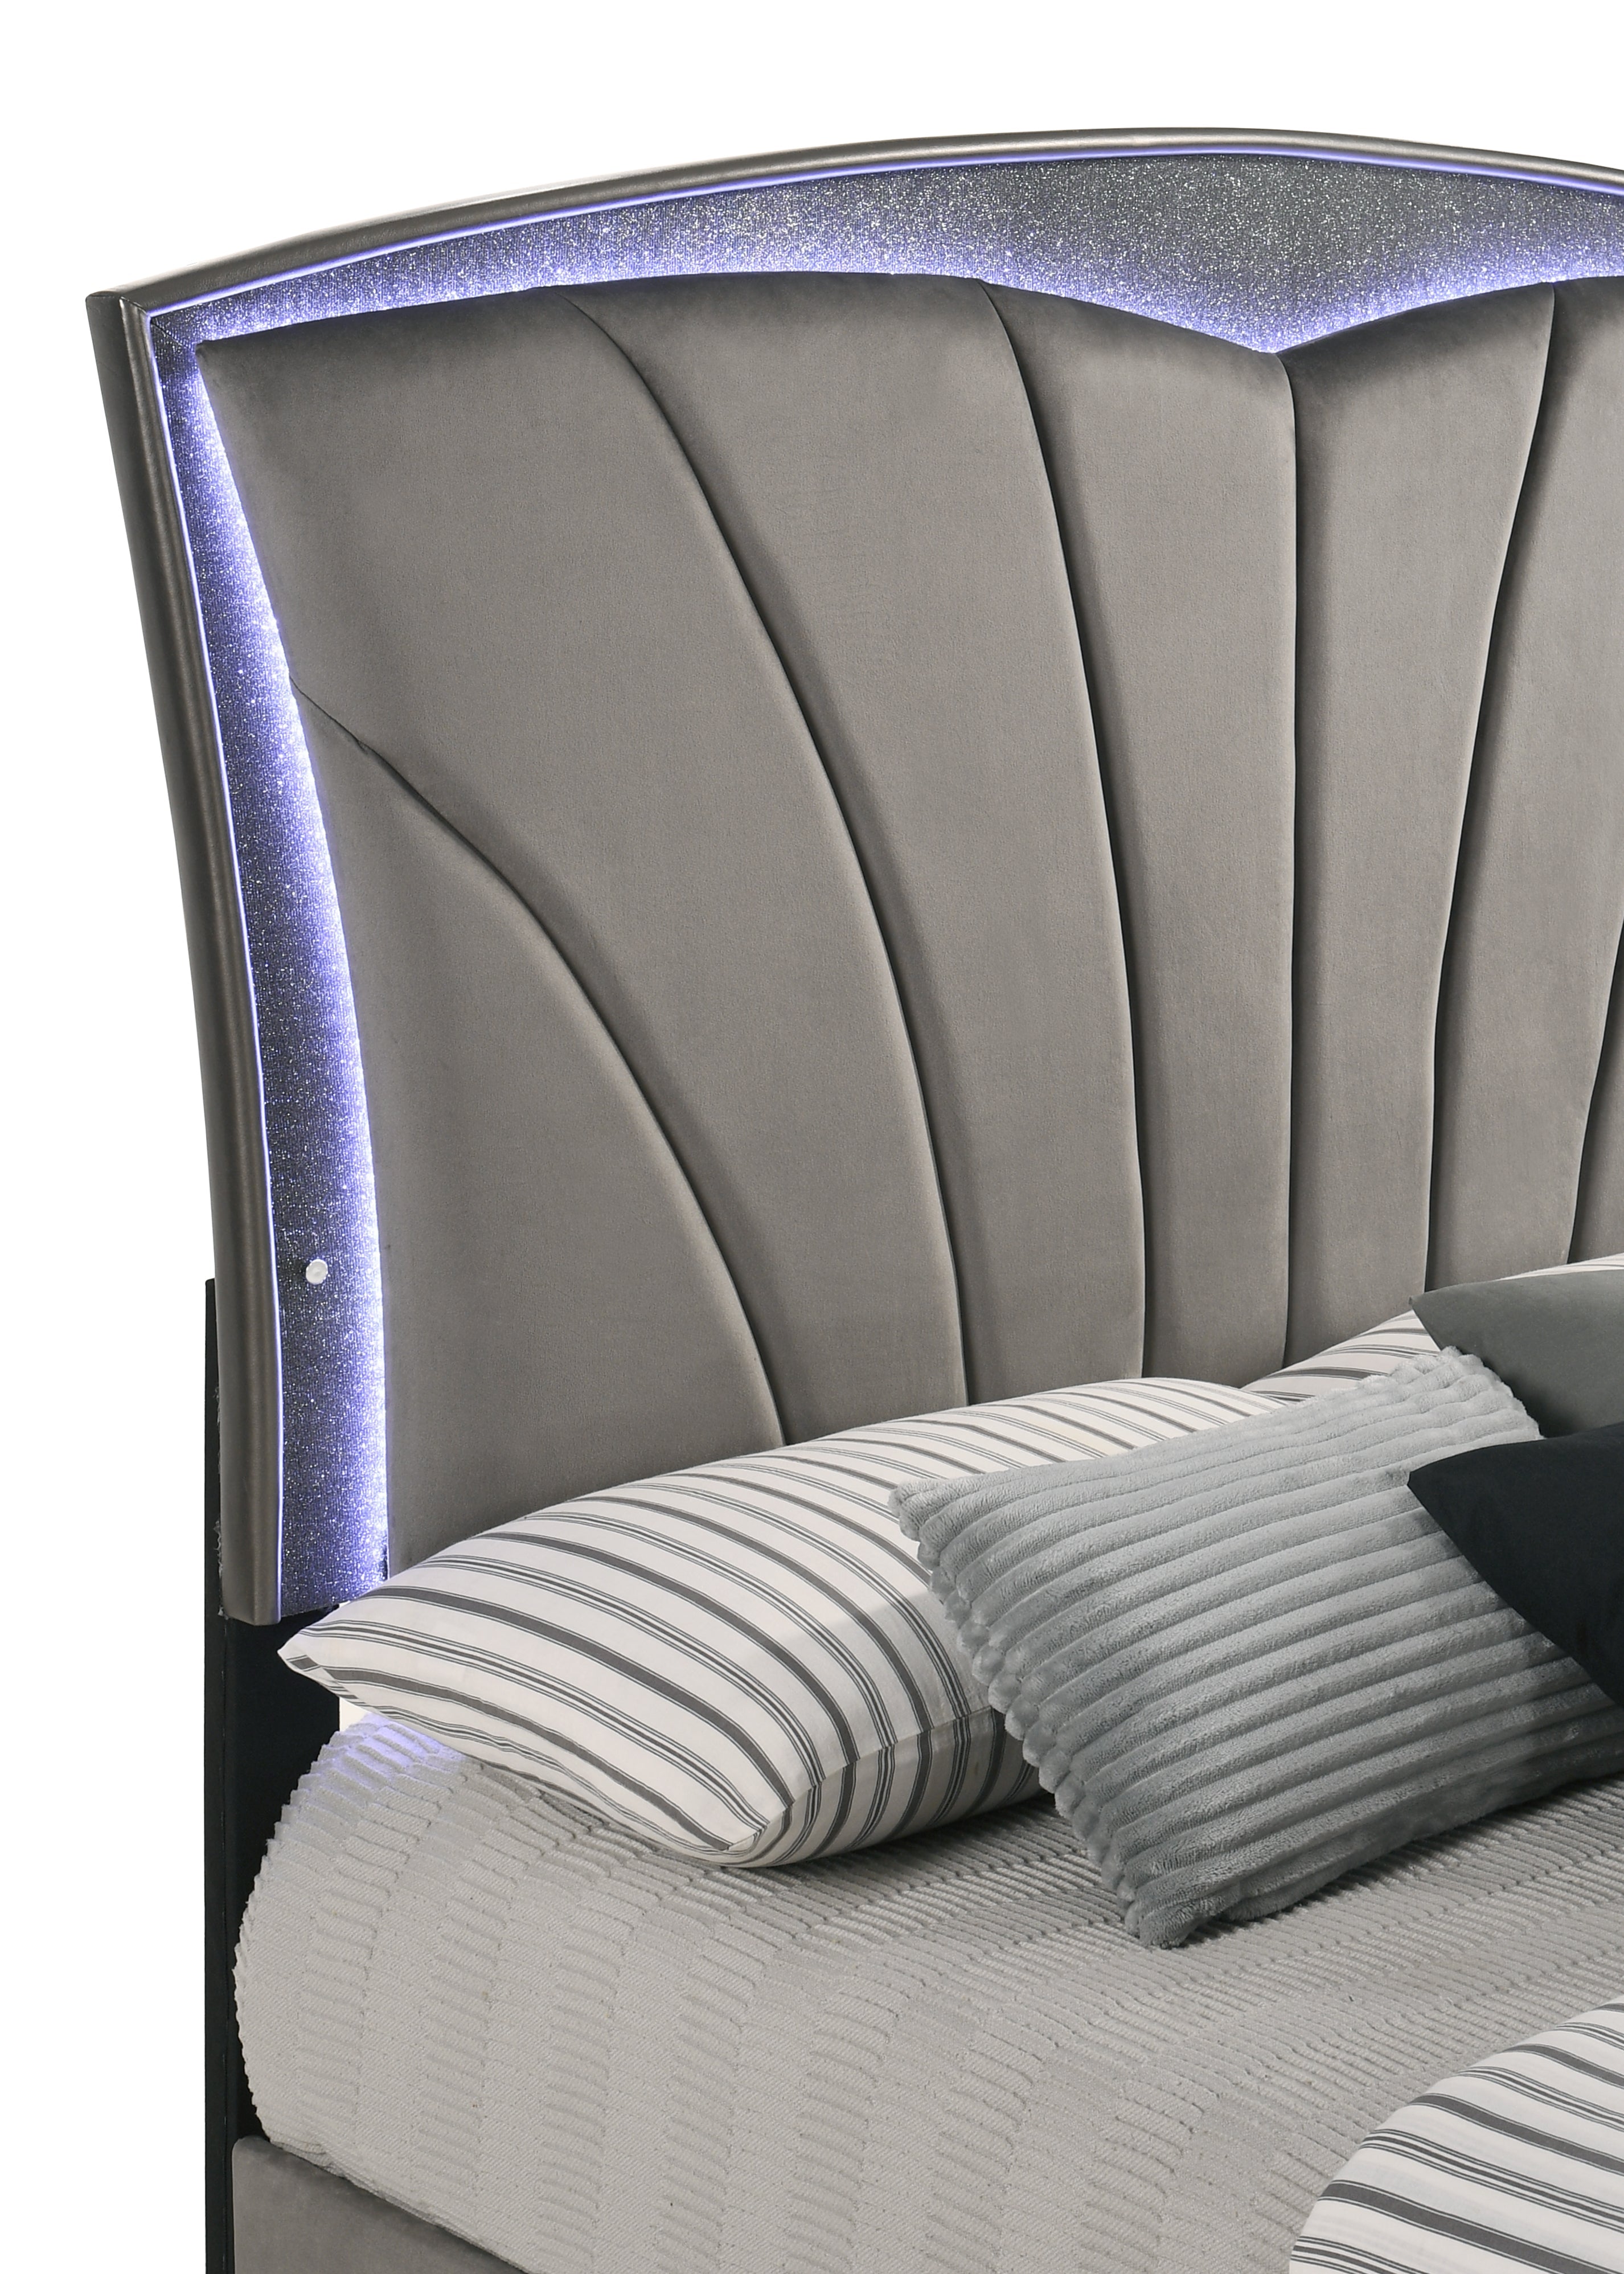 Frampton Gray LED Upholstered Platform Bedroom Set - SET | B4790-Q-HBFB | B4790-KQ-RAIL | B4790-1 | B4790-11 | B4790-2 - Bien Home Furniture &amp; Electronics